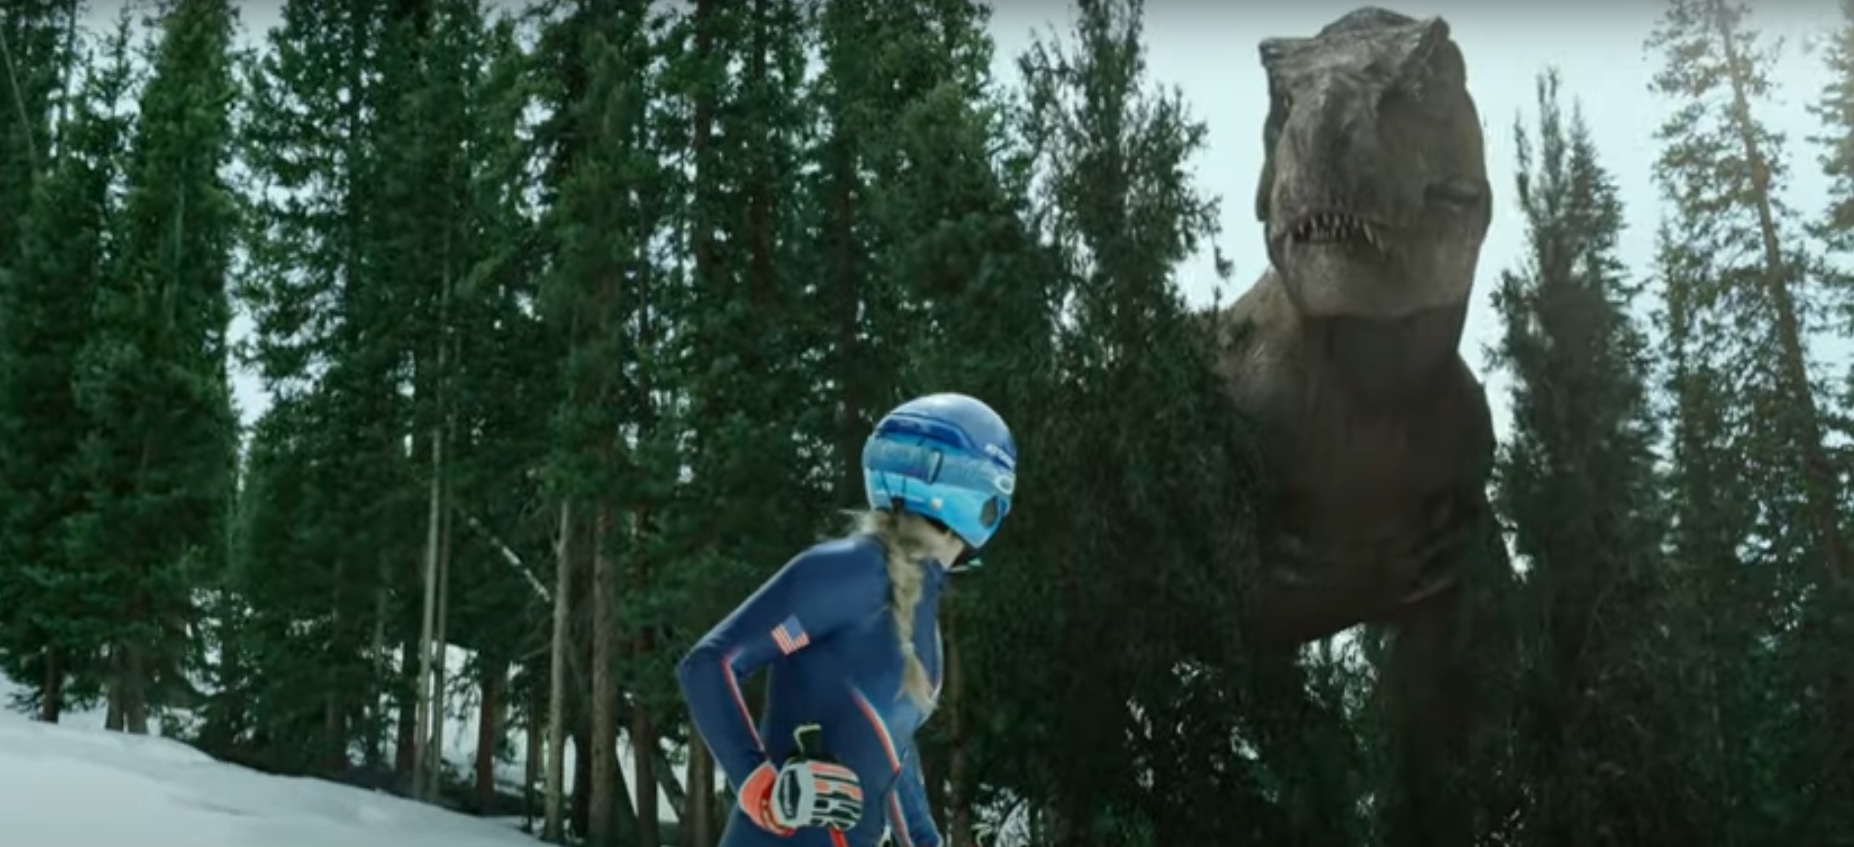 Jurassic World Dominion Meets NBC Olympics Television Spot